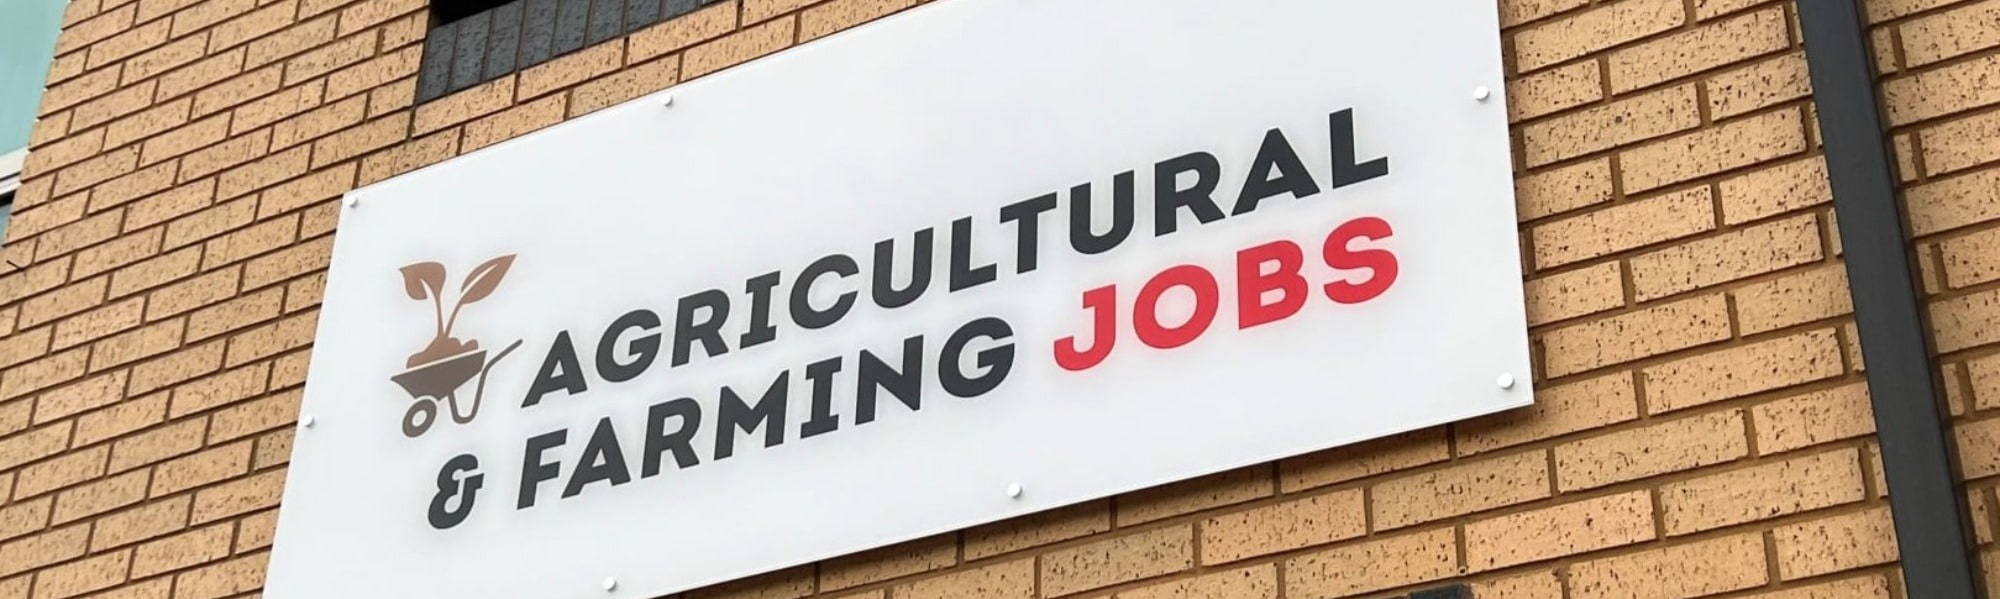 Agricultural and Farming Jobs logo